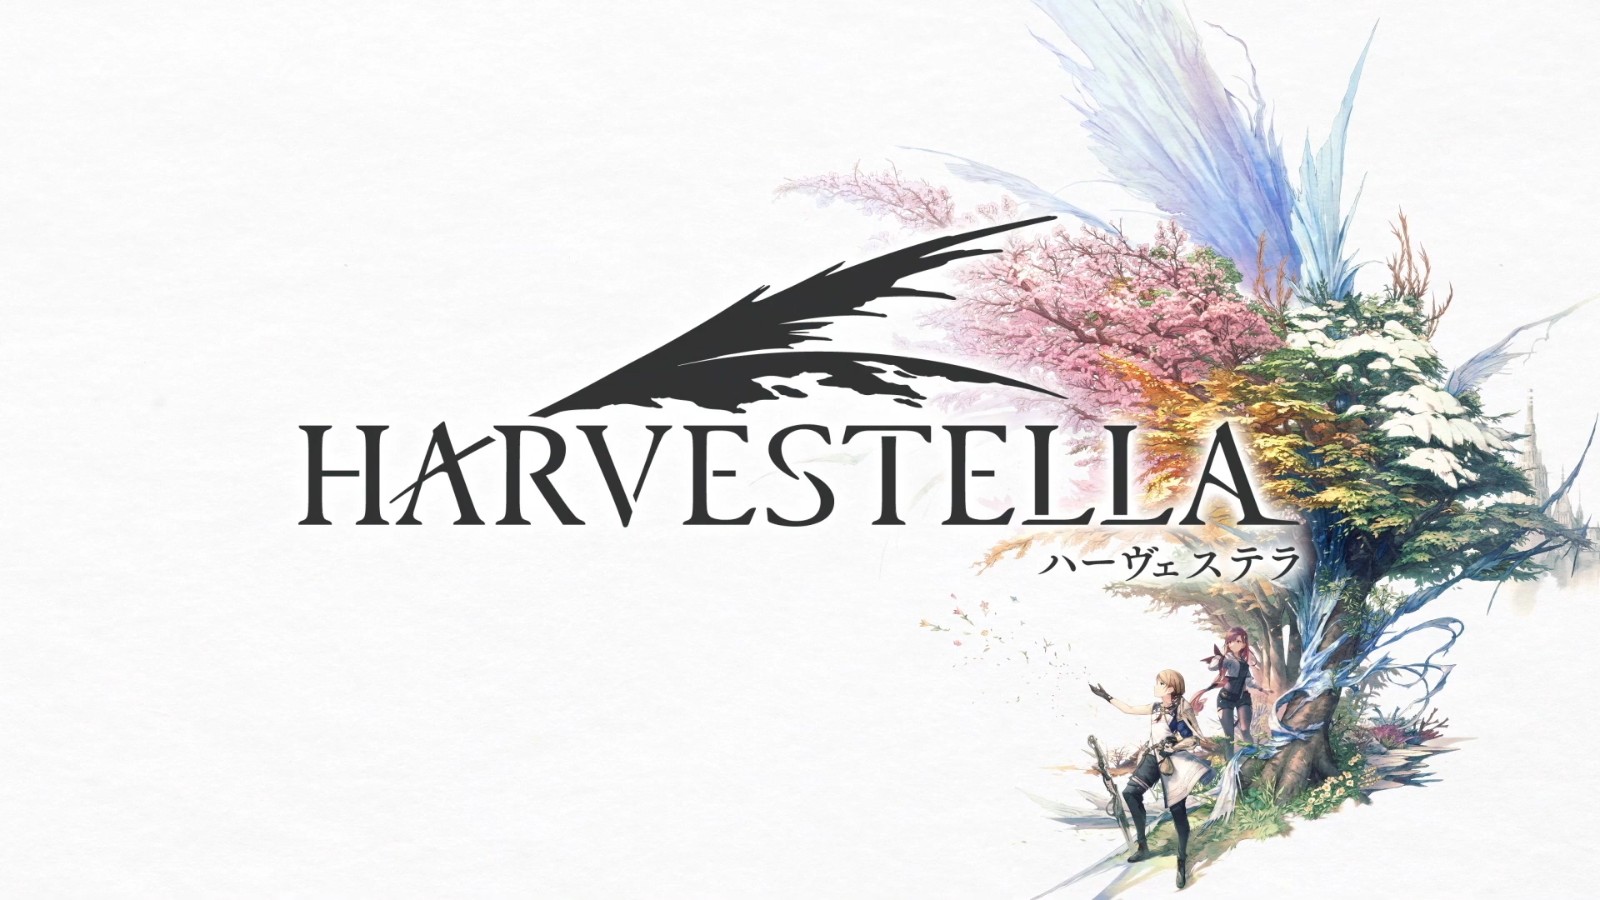 SE公布生活模擬RPG《Harvestella》 登陸PC和Switch